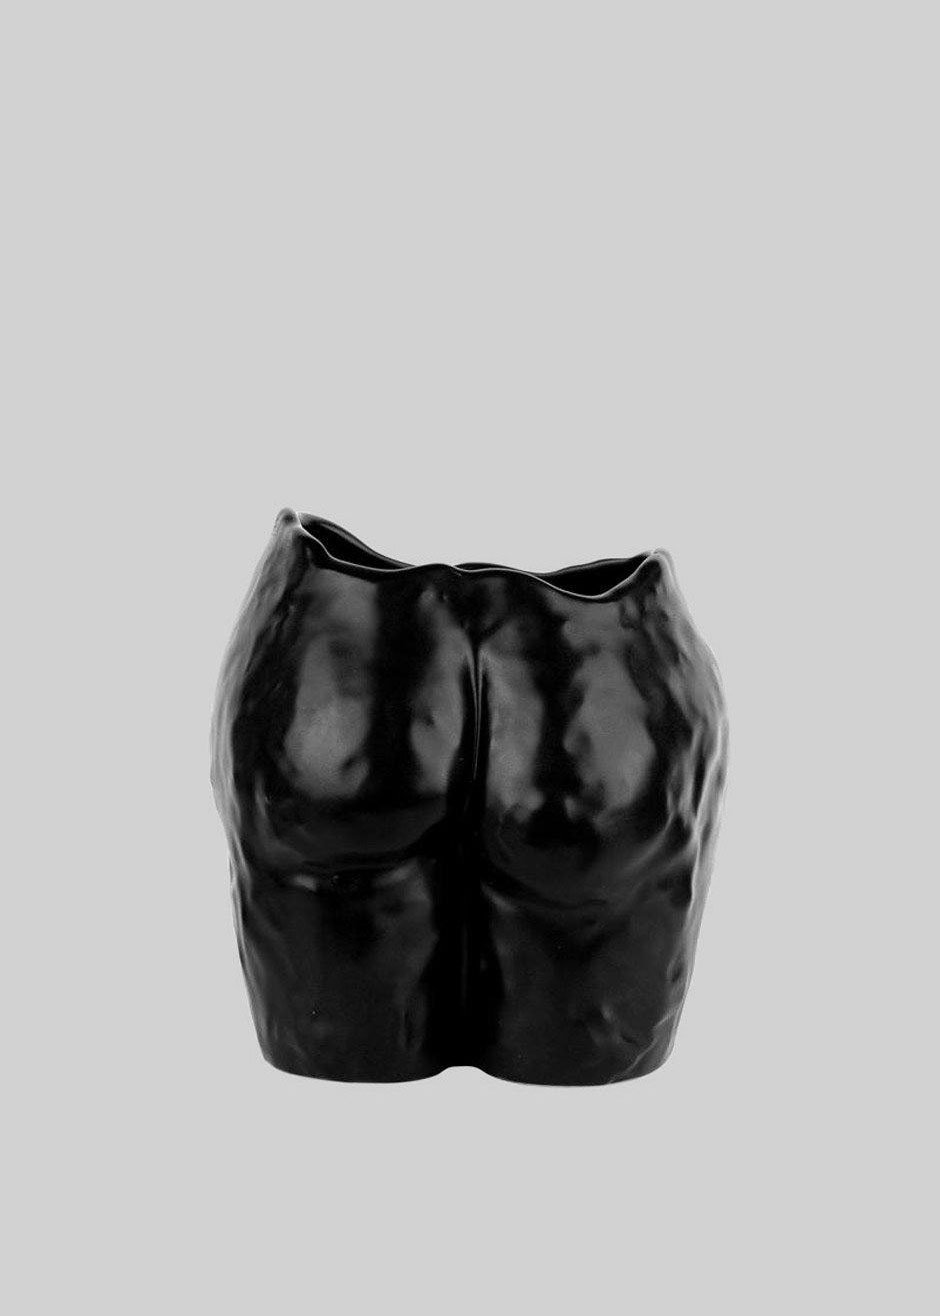 Anissa Kermiche Popotin Ceramic Pot - Black